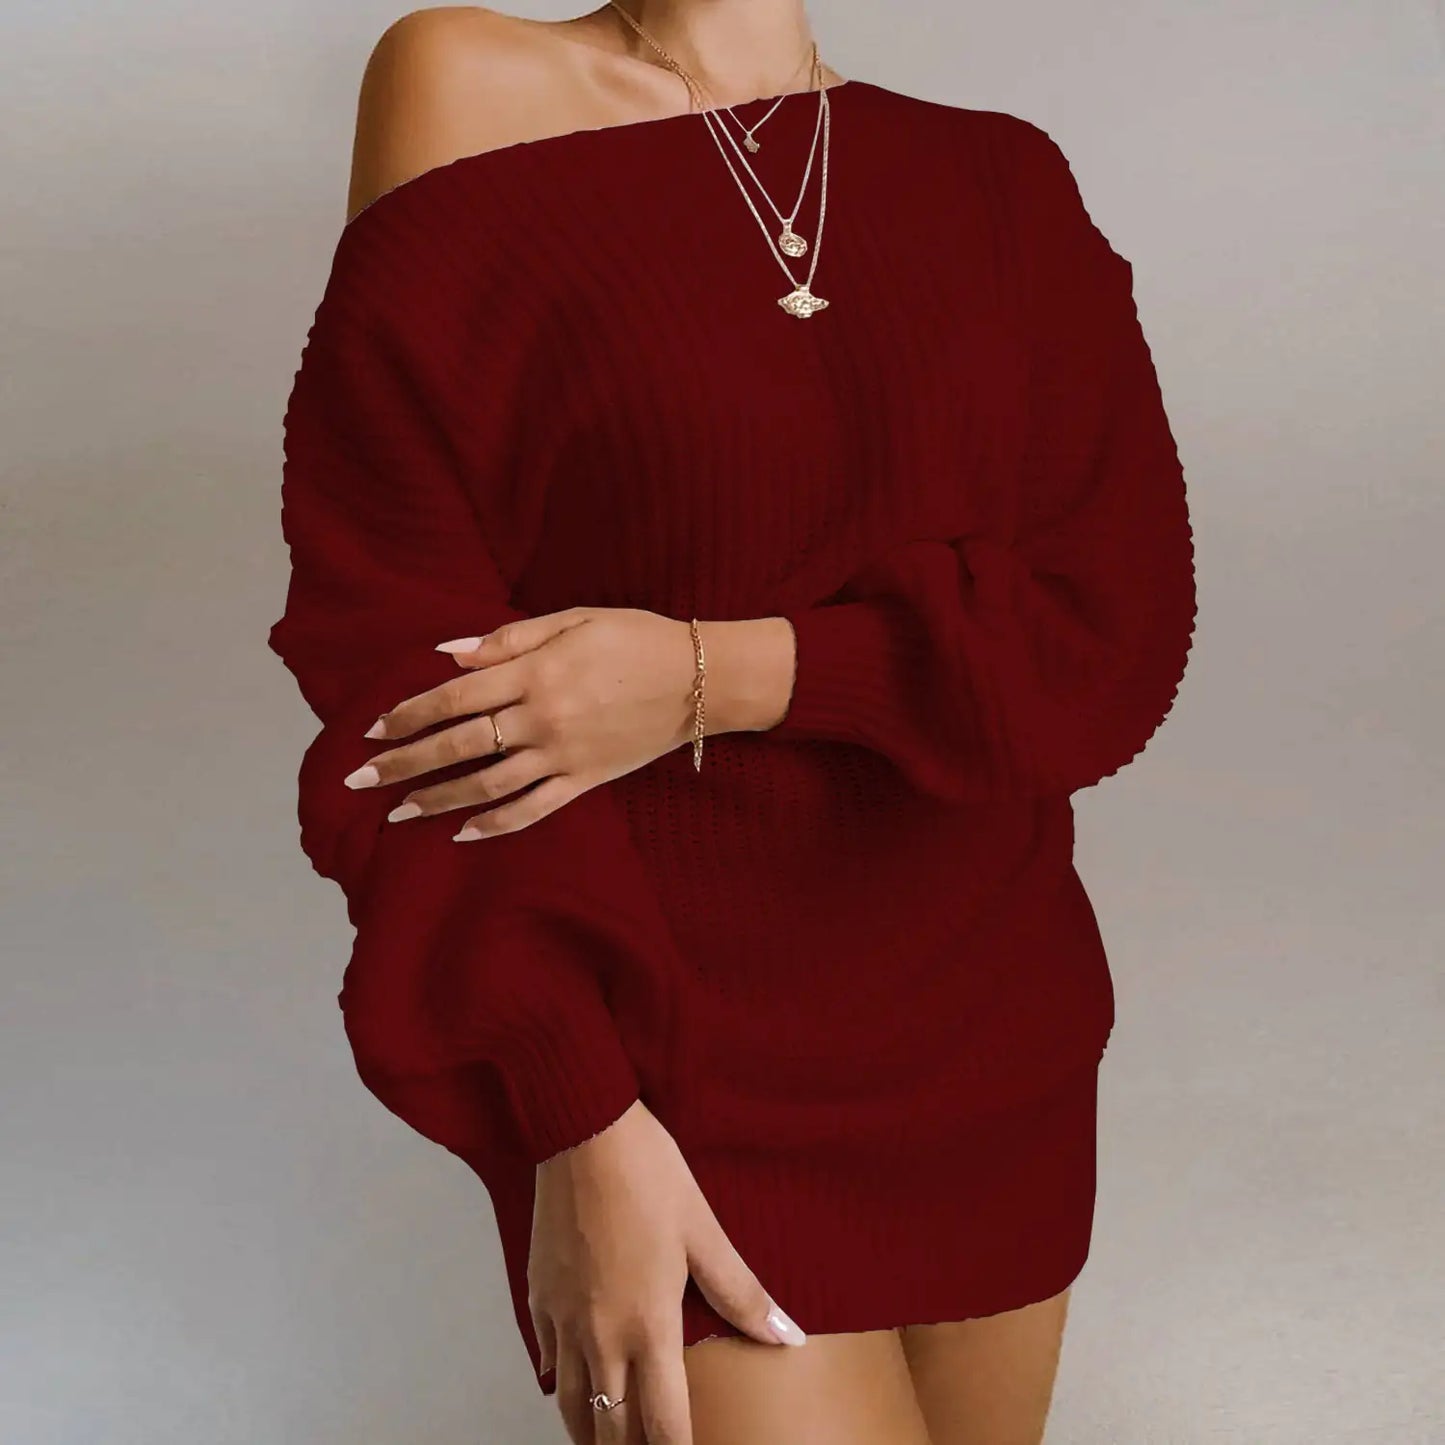 Off-Shoulder Women's Knitted Sweater Dress